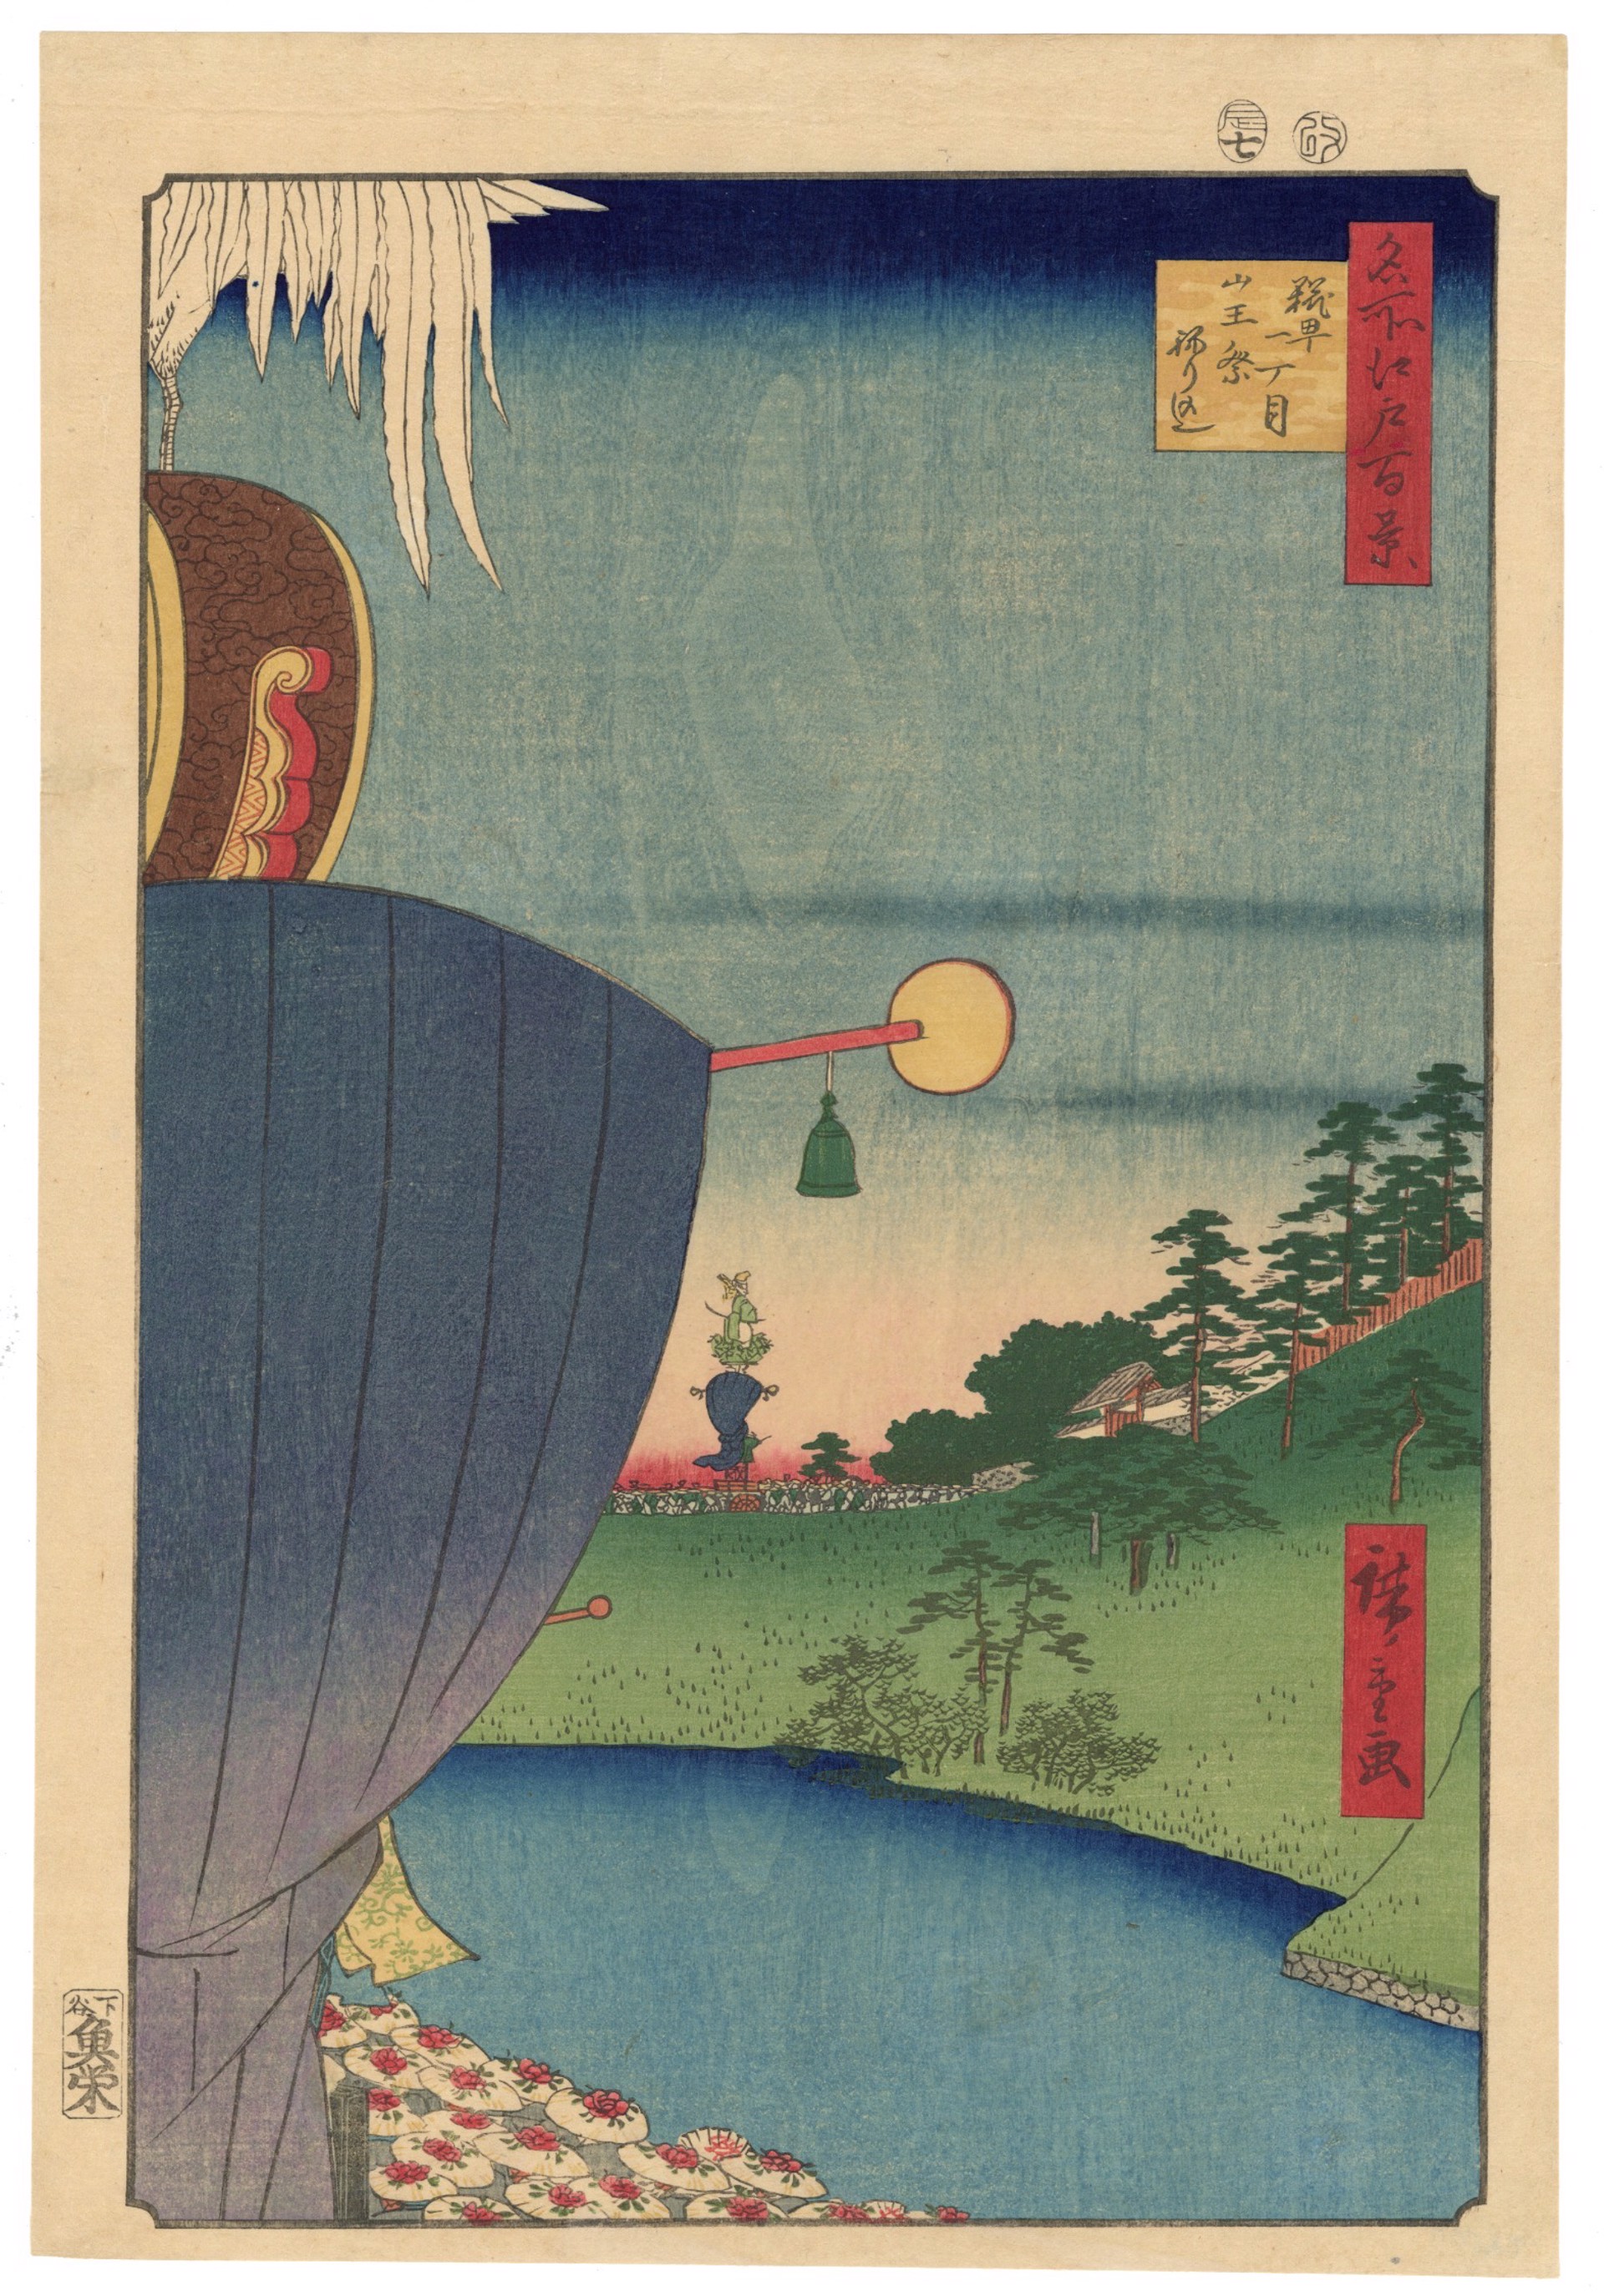 Sano Festival Procession at Kojimachi by Hiroshige